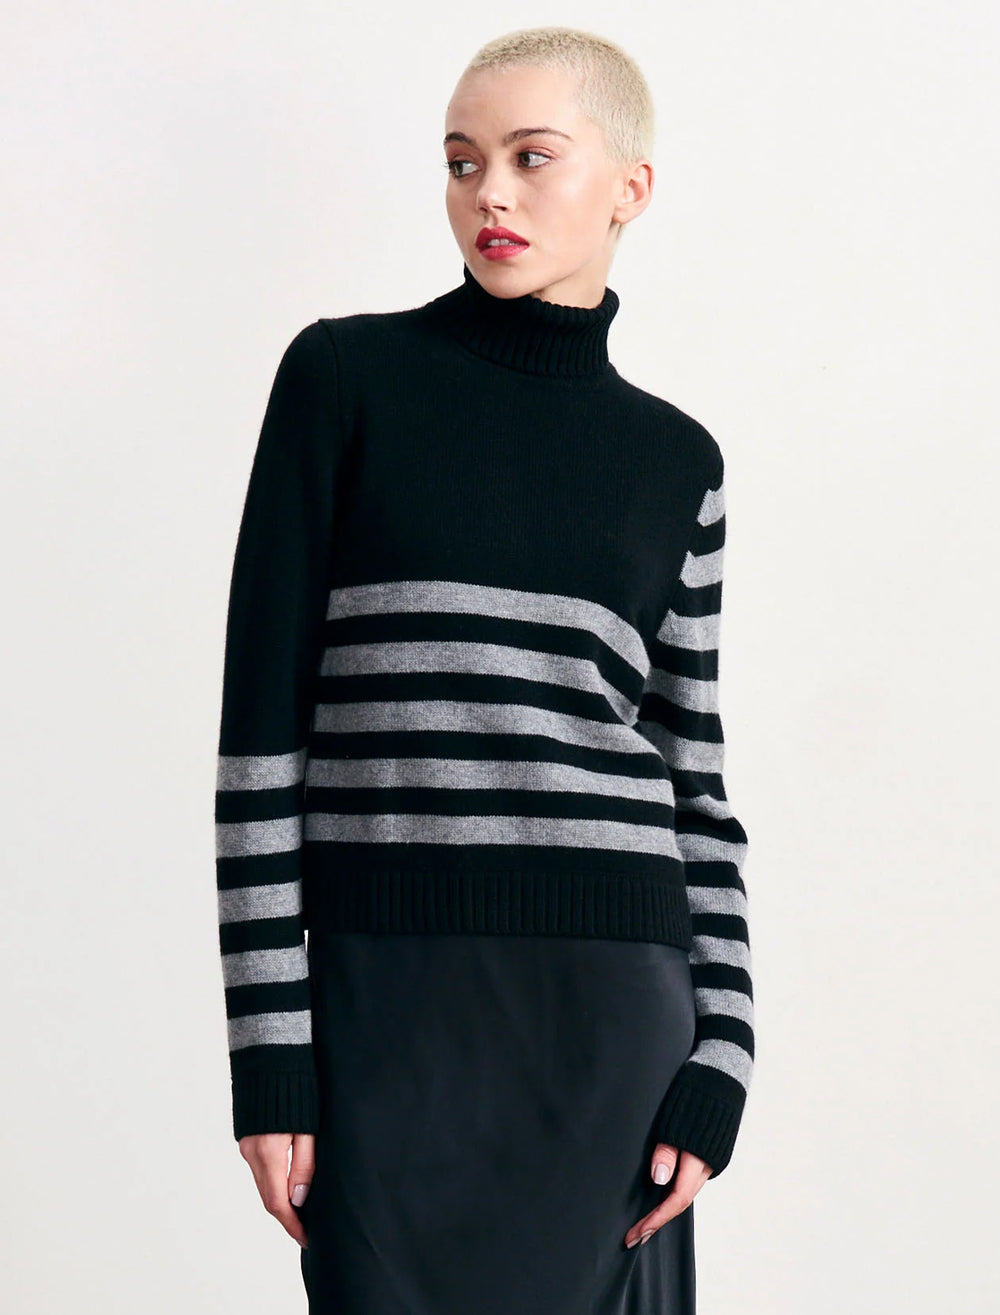 Model wearing Jumper 1234's invert stripe roll collar sweater in black and cloud.